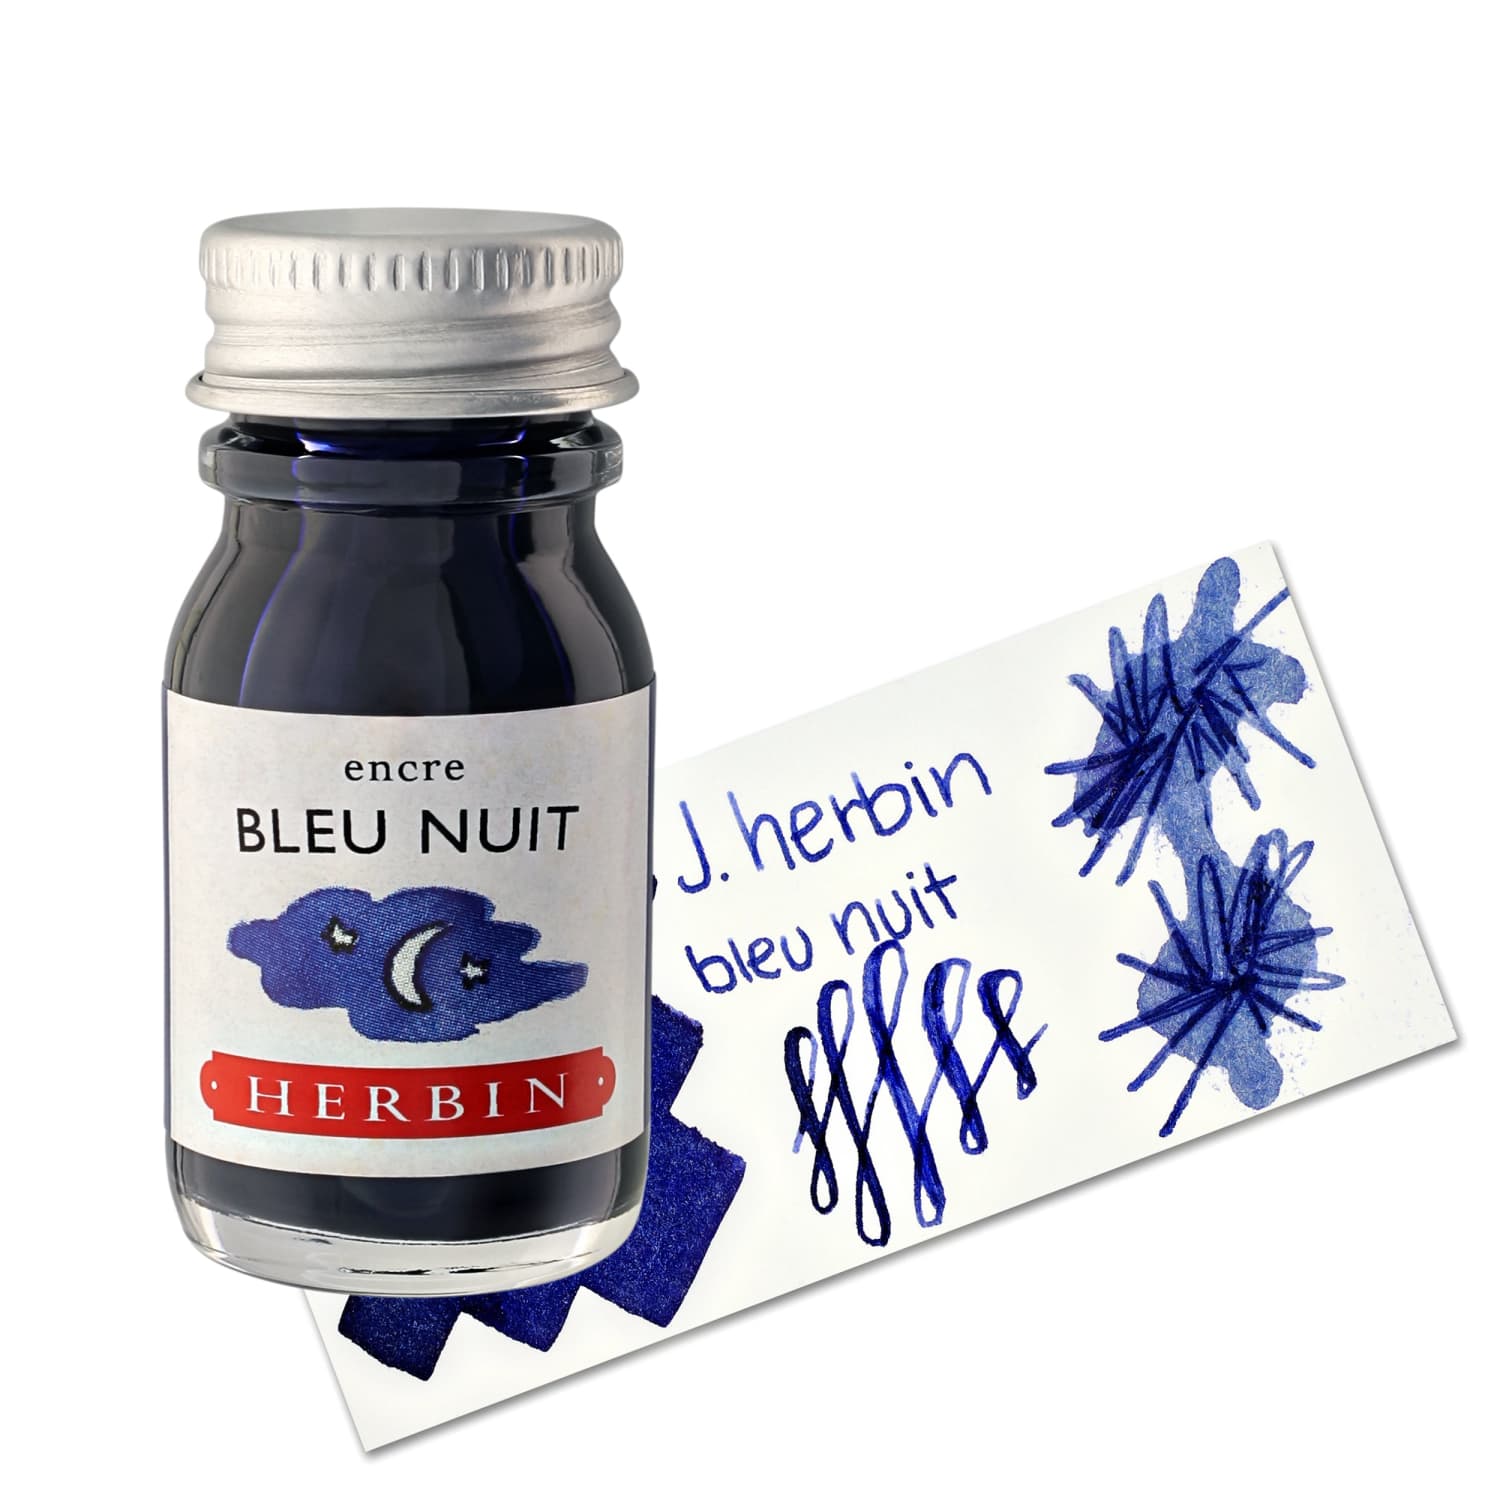 J. Herbin Fountain Pen Ink - Bleu Nuit 30 ml